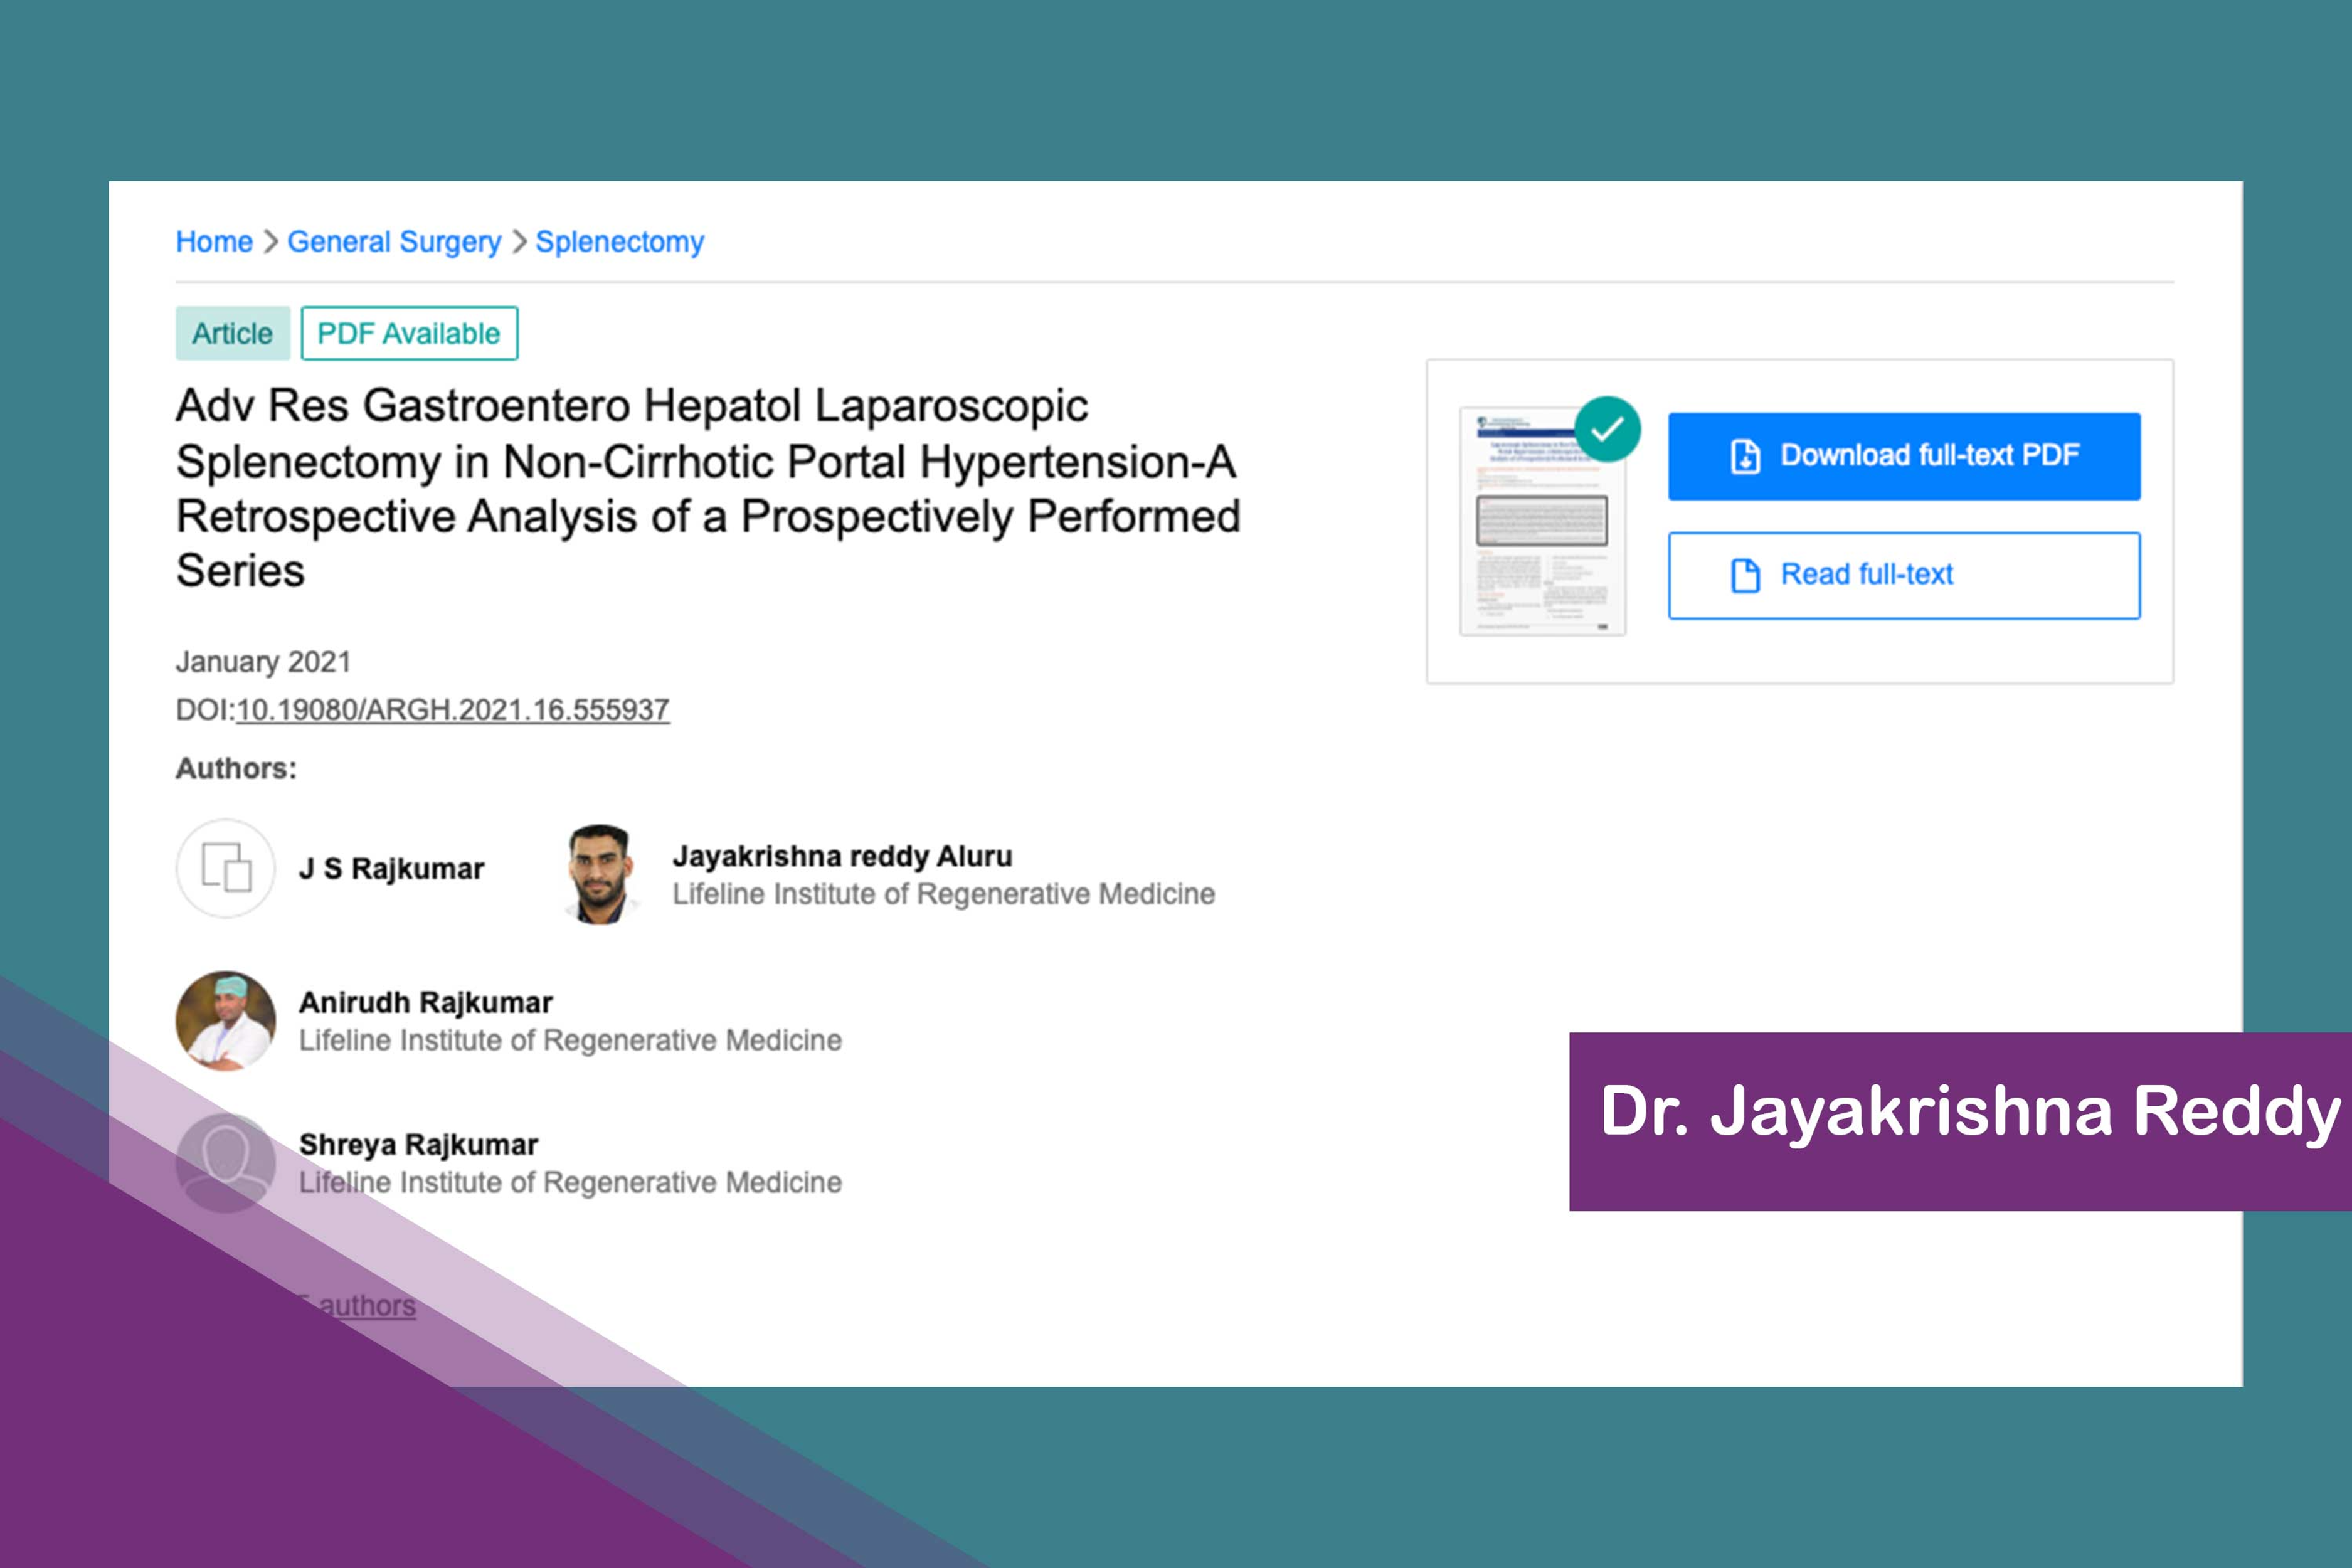 Adv Res Gastroentero Hepatol Laparoscopic Splenectomy in Non-Cirrhotic Portal Hypertension-A Retrospective Analysis of a Prospectively Performed Series